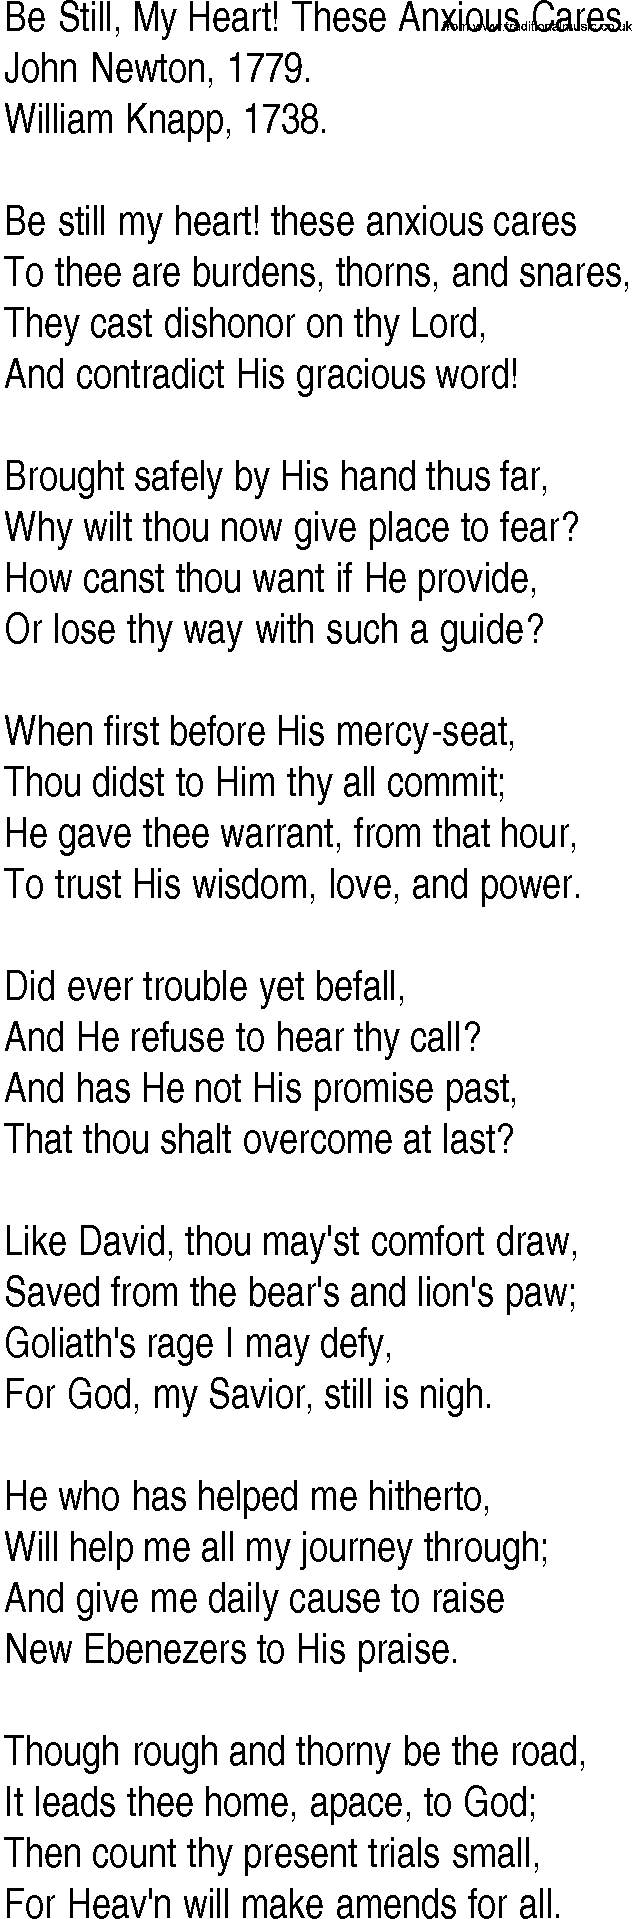 Hymn and Gospel Song: Be Still, My Heart! These Anxious Cares by John Newton lyrics